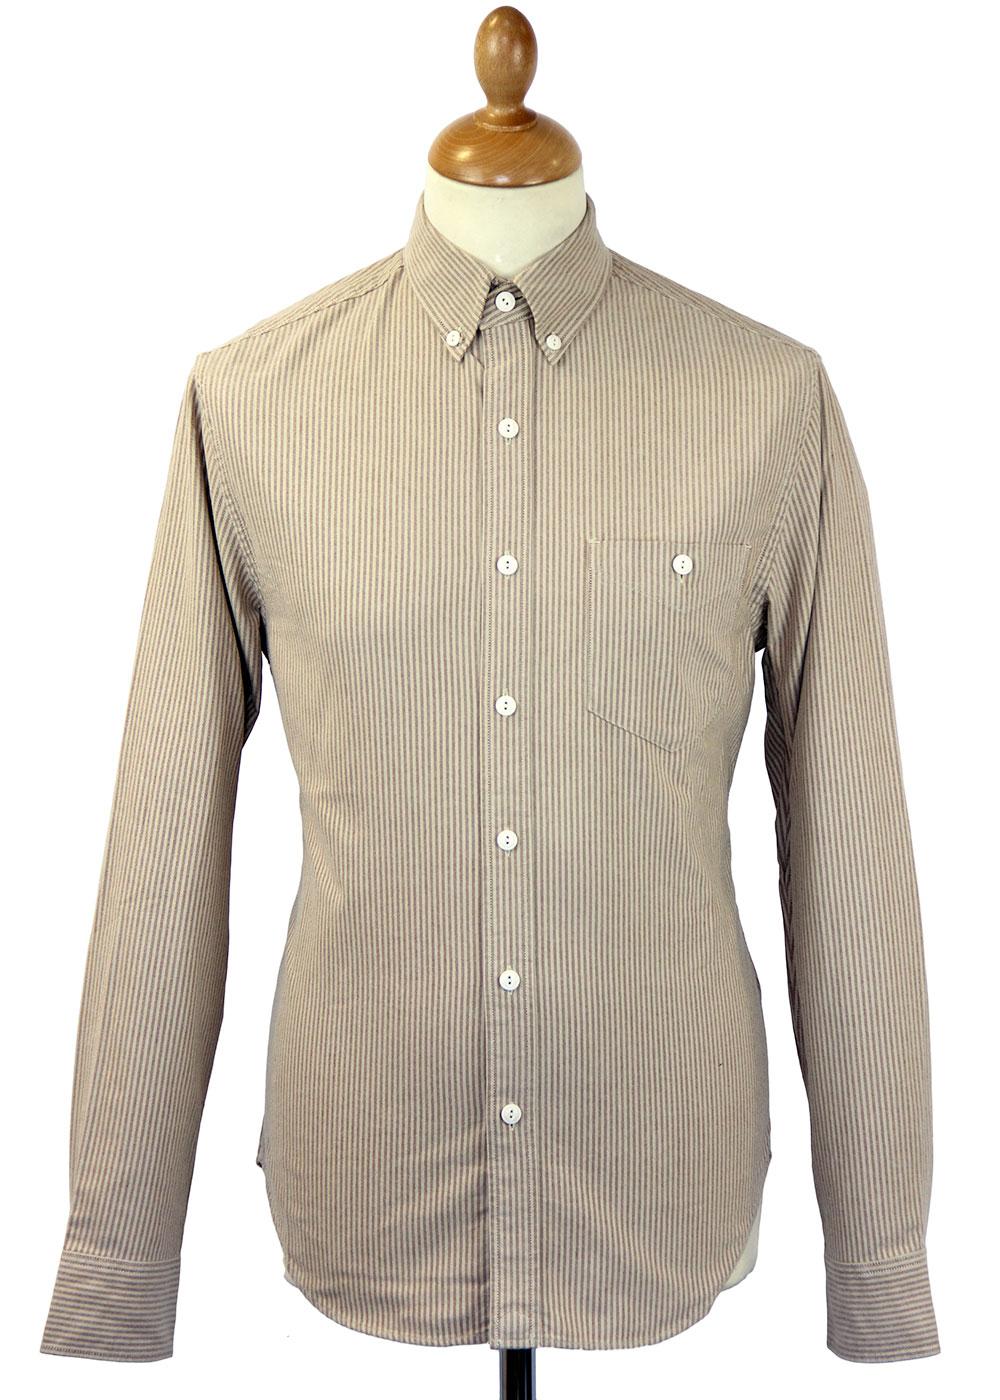 Lowell Pendleton Retro Mod Stripe Oxford Shirt (R)